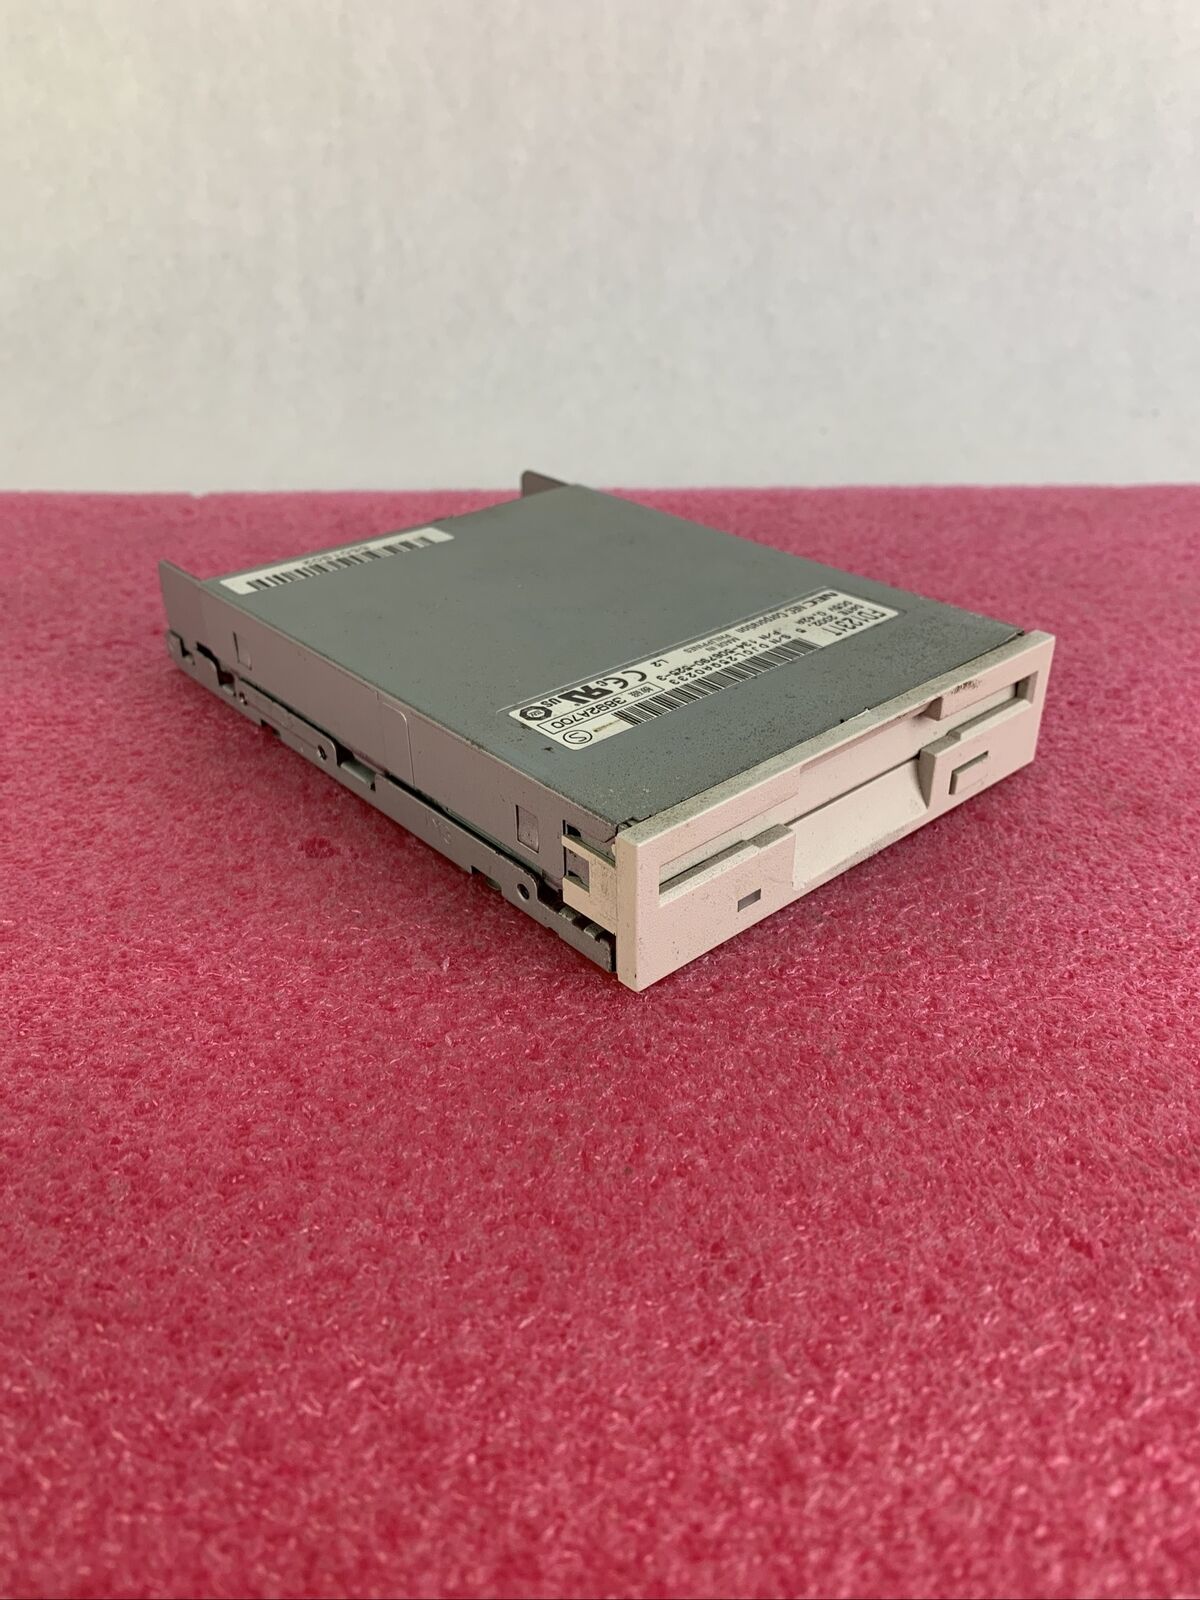 Vintage NEC FD1231T 1.44 MB 3.5 inch Floppy Drive